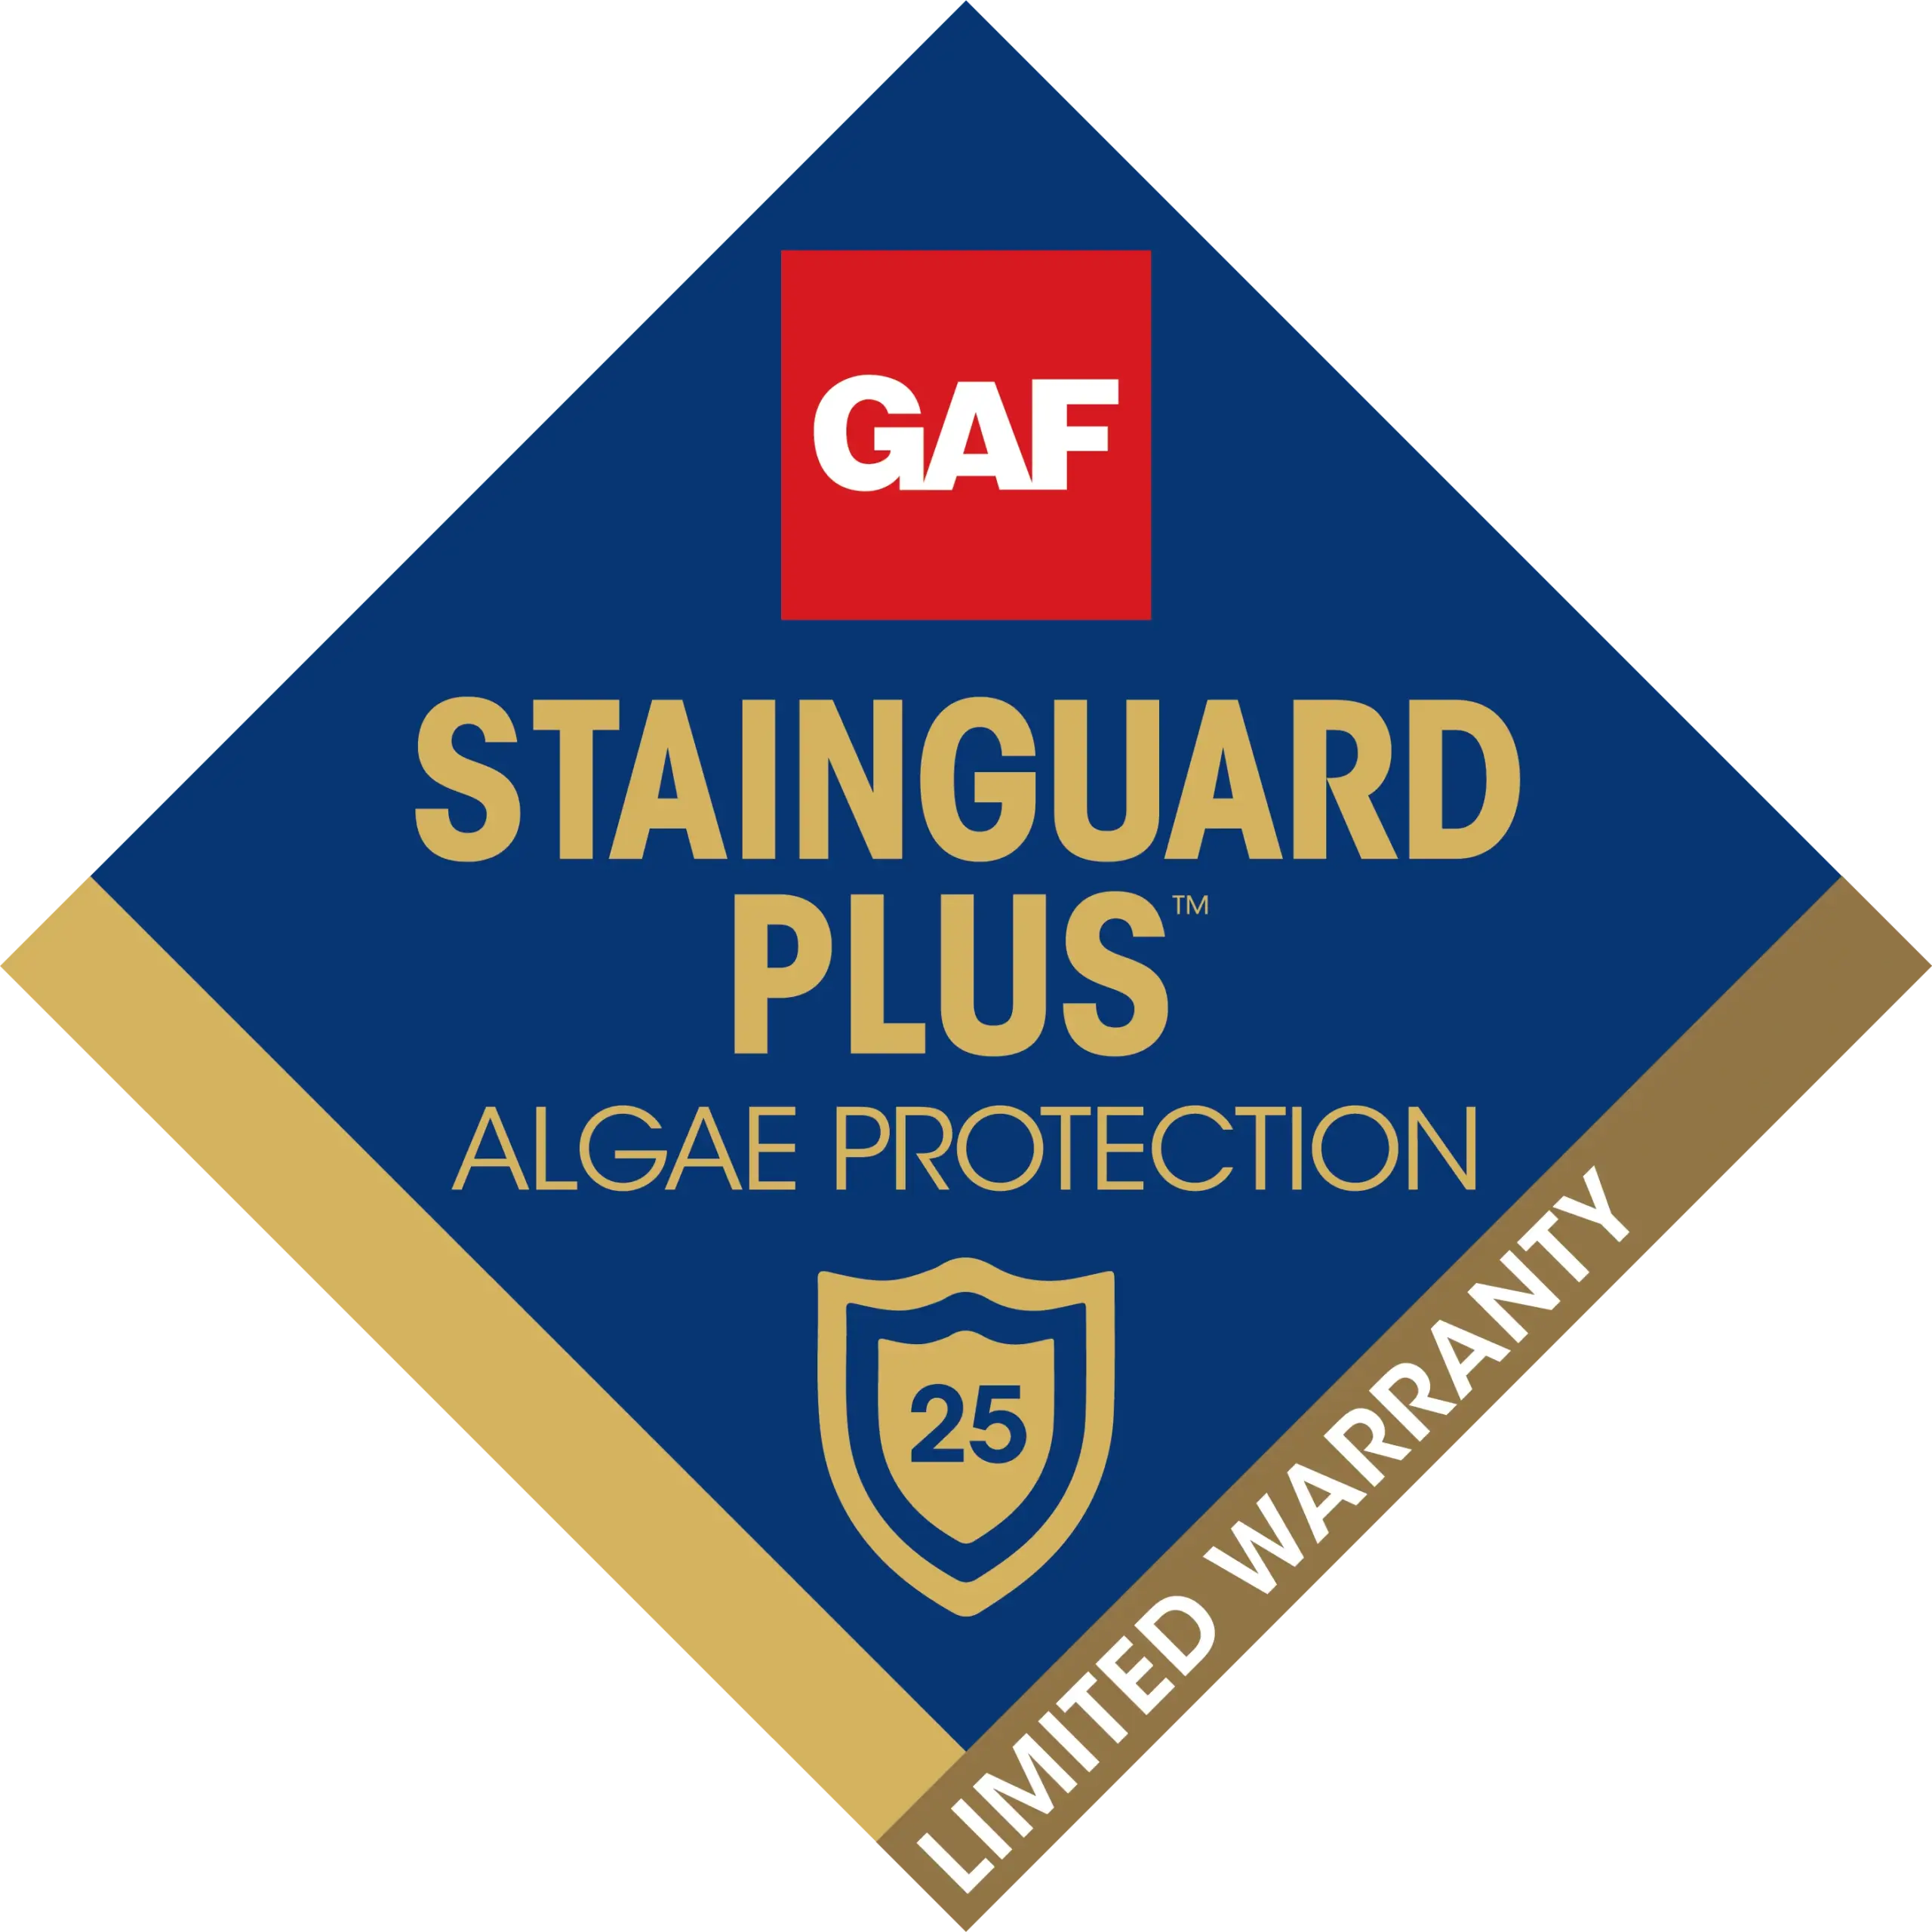 StainGuard Plus Algae Protection Warranty